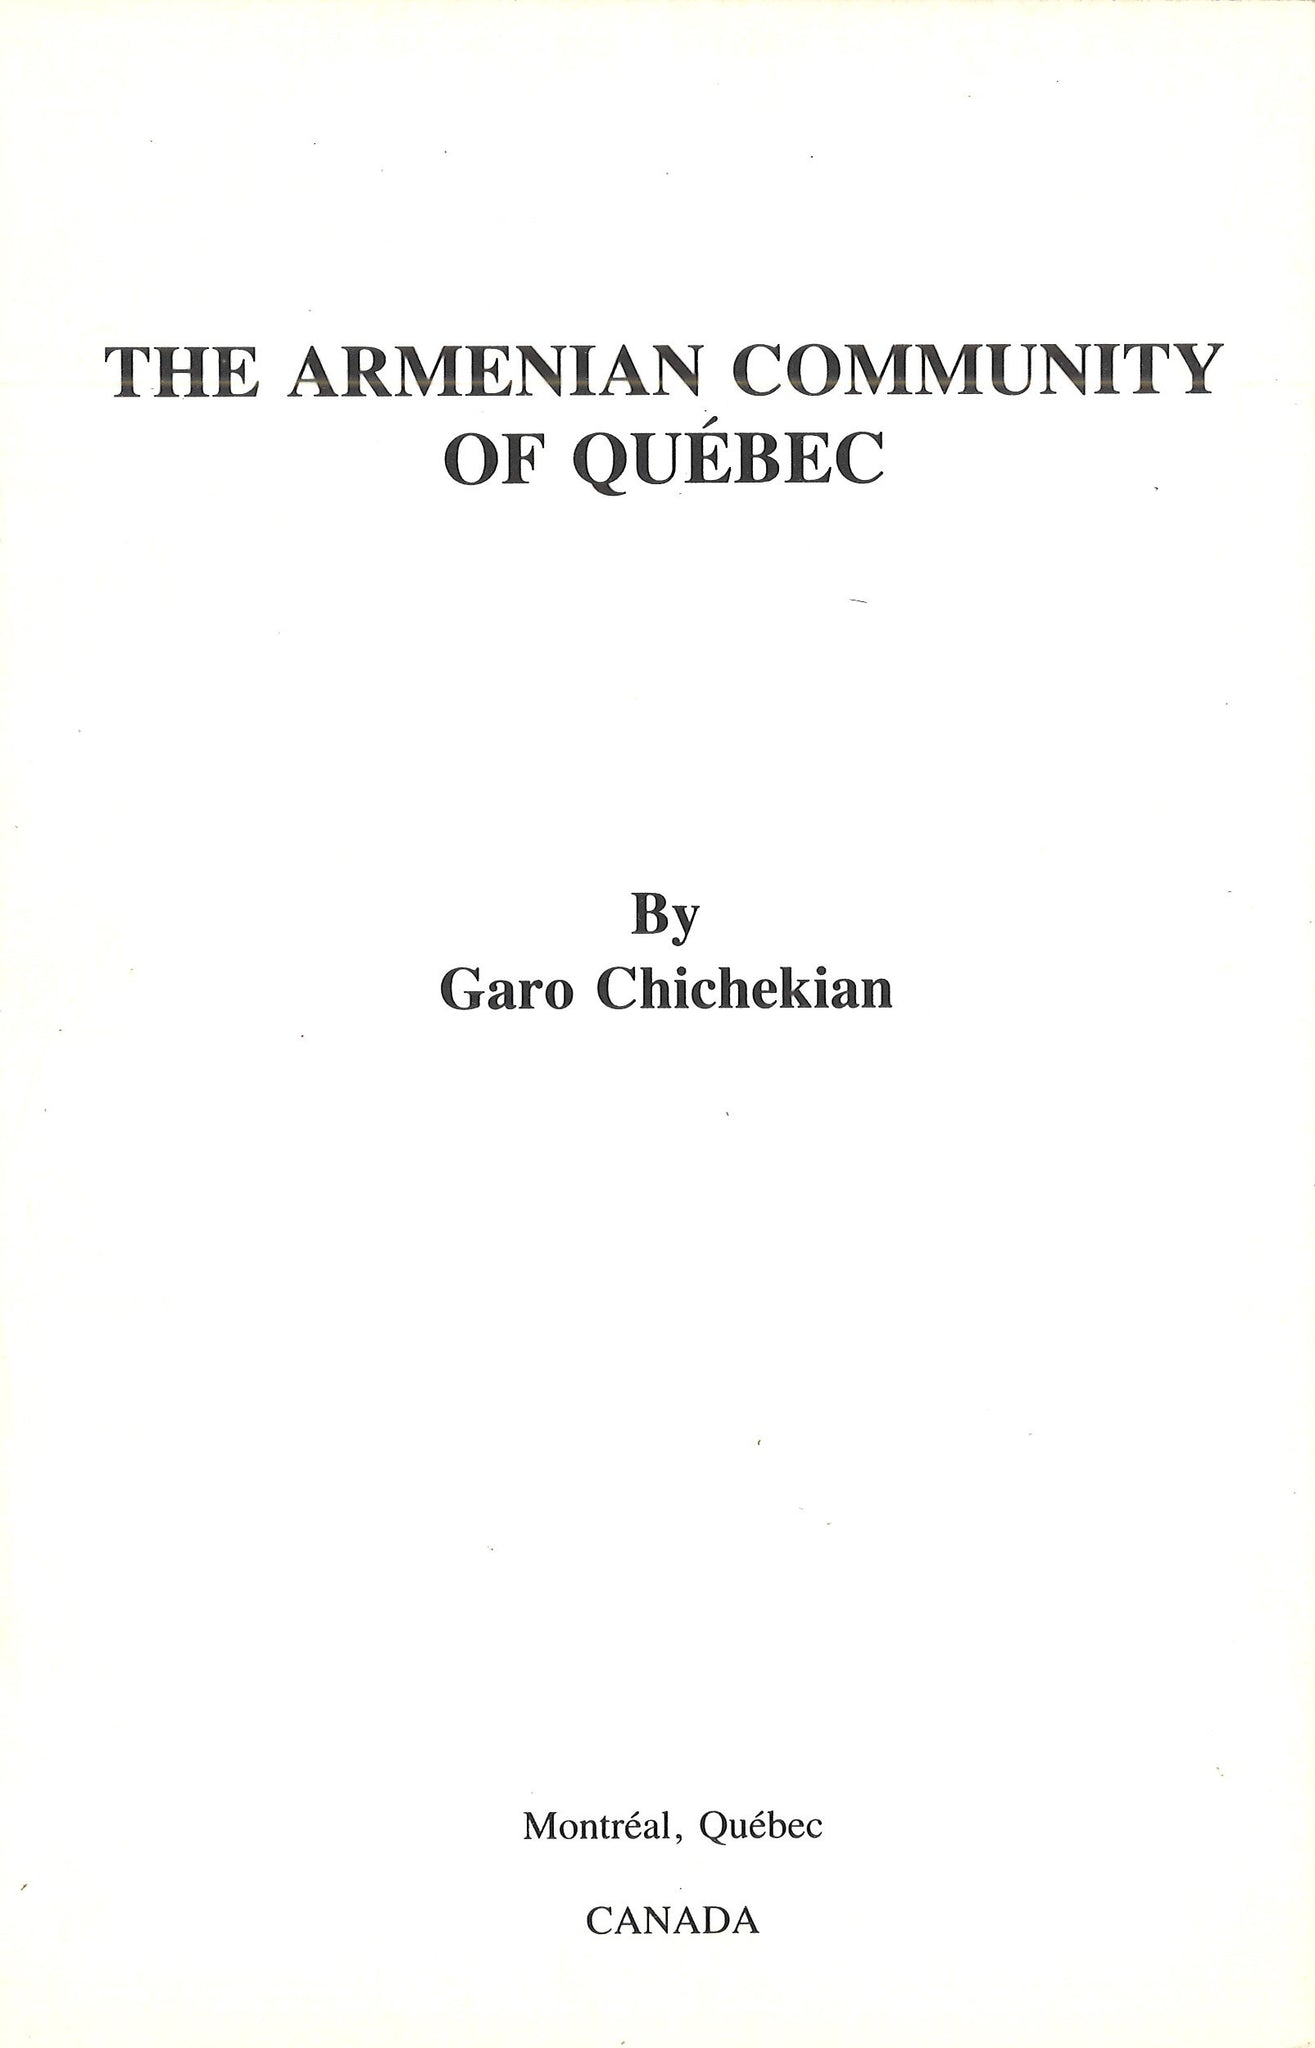 Armenian Community of Quebec, The